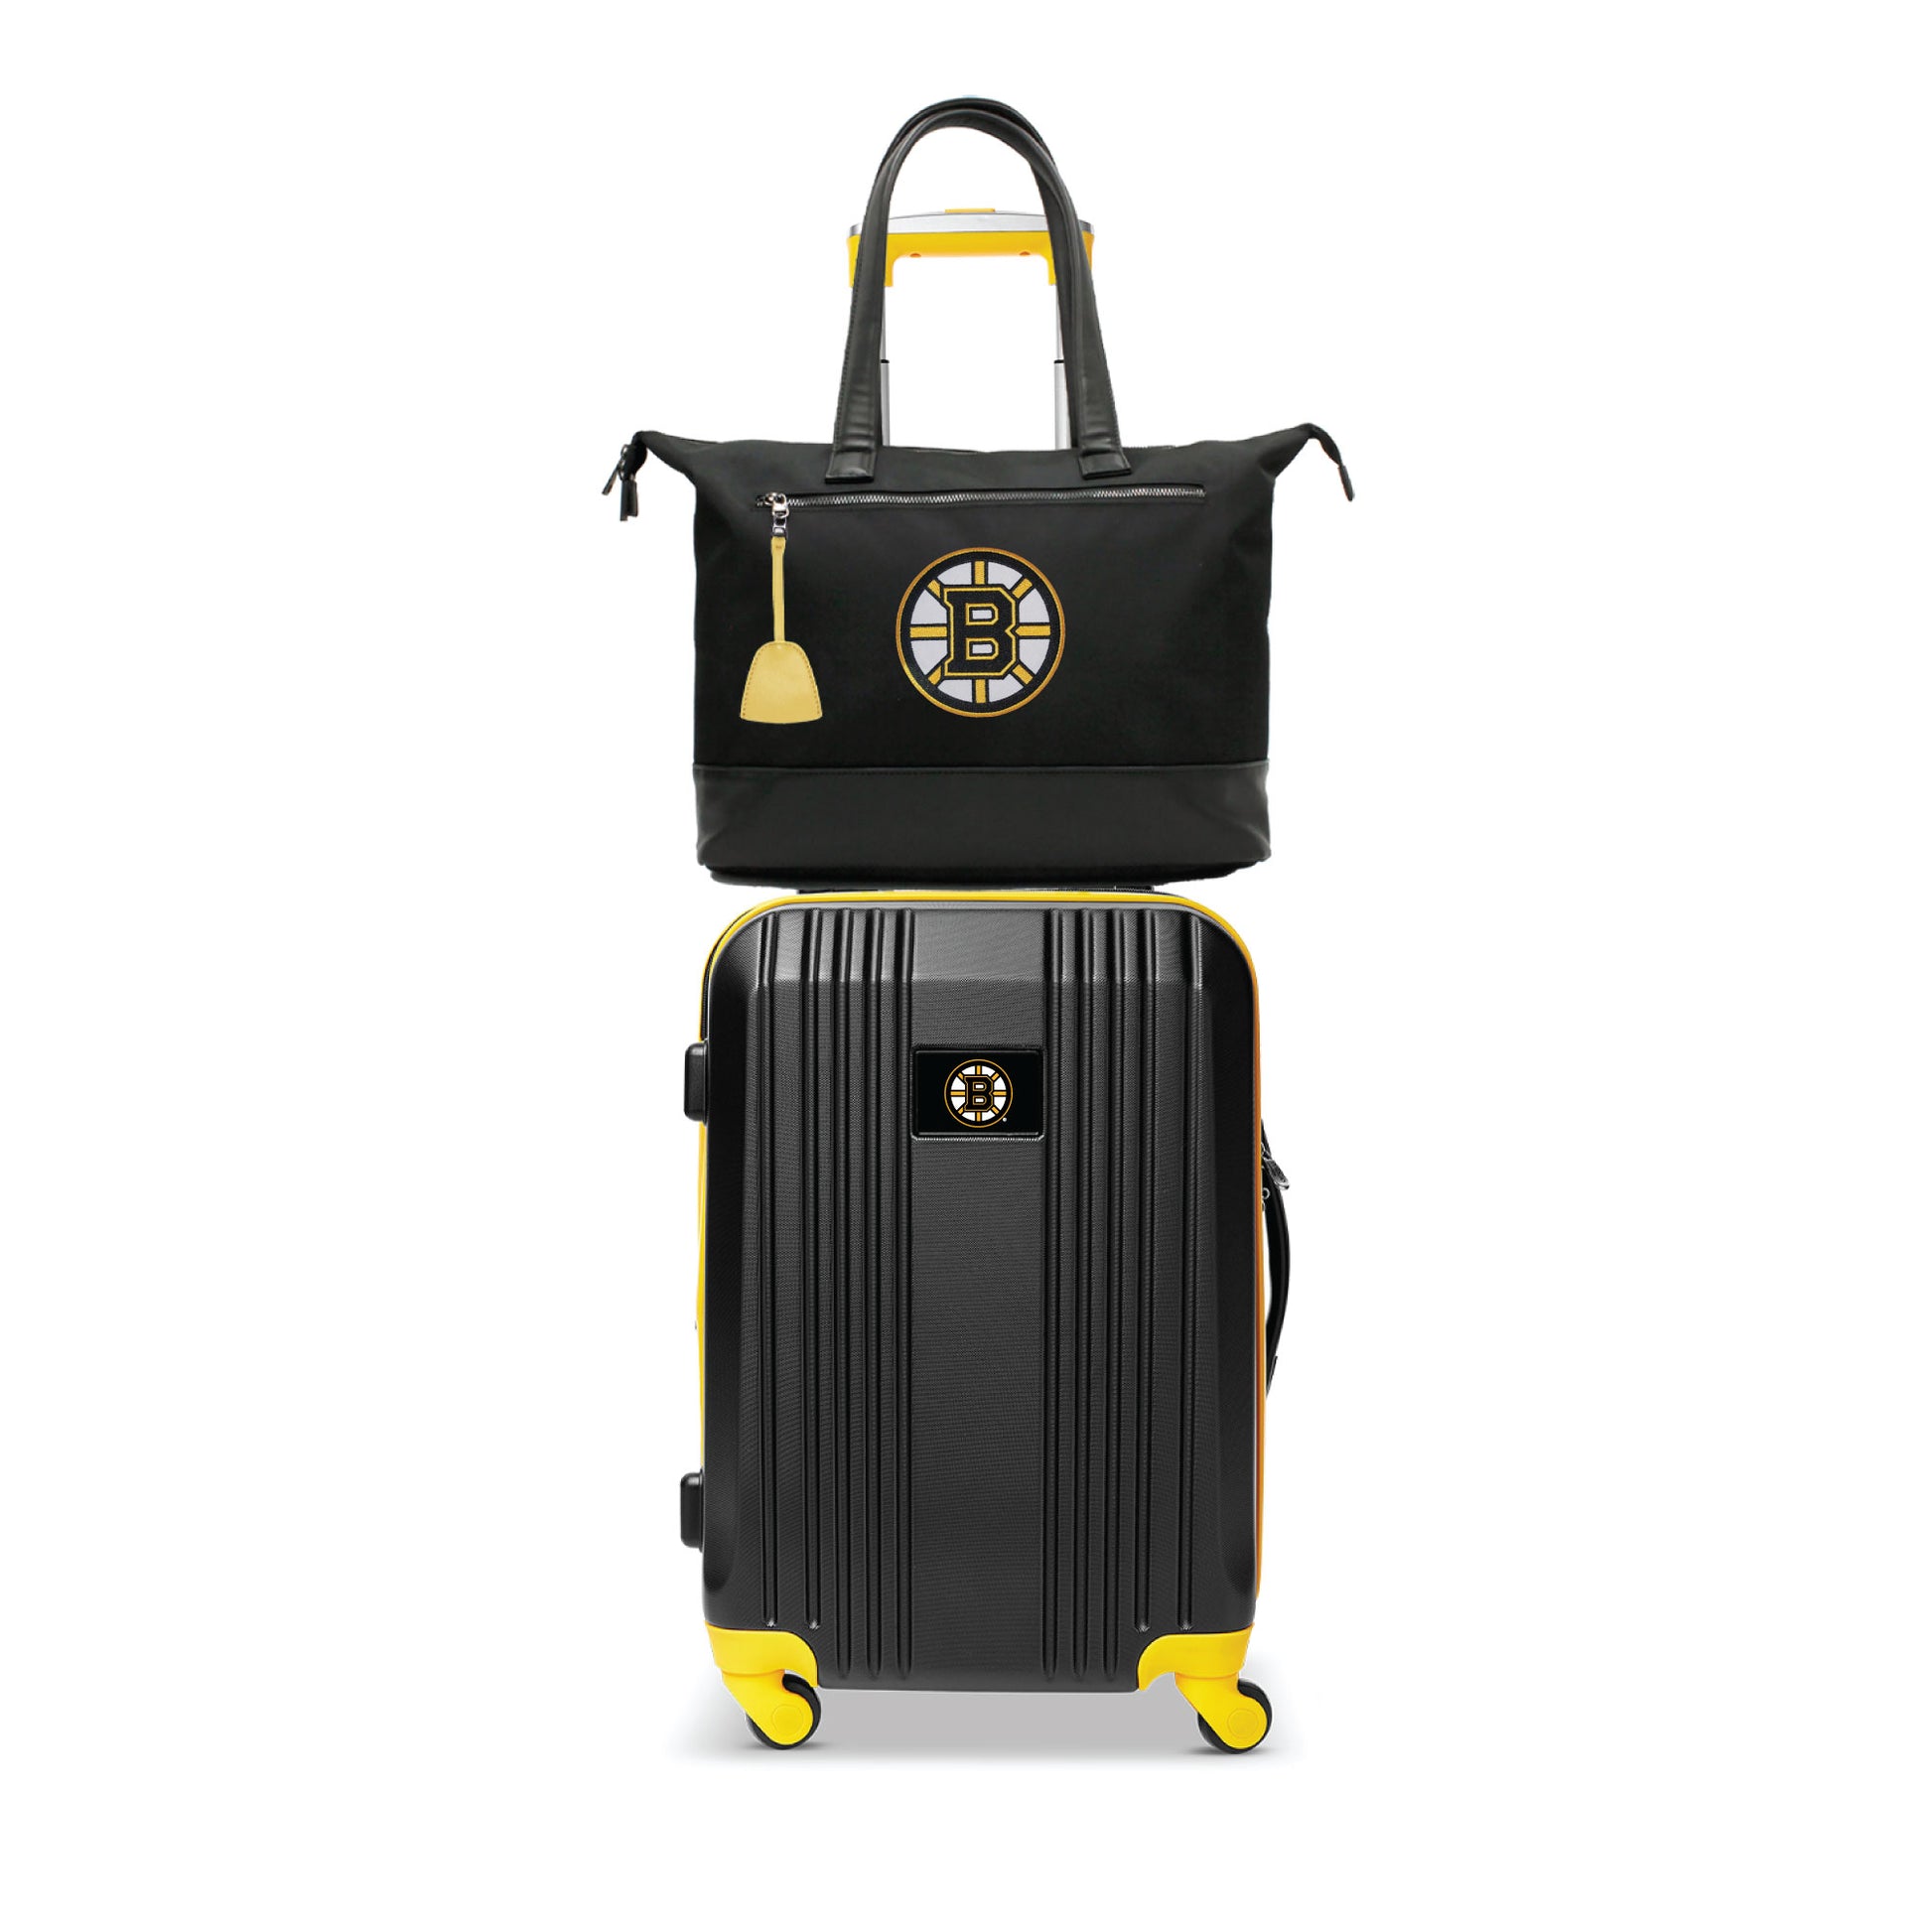 Boston Bruins Premium Laptop Tote Bag and Luggage Set